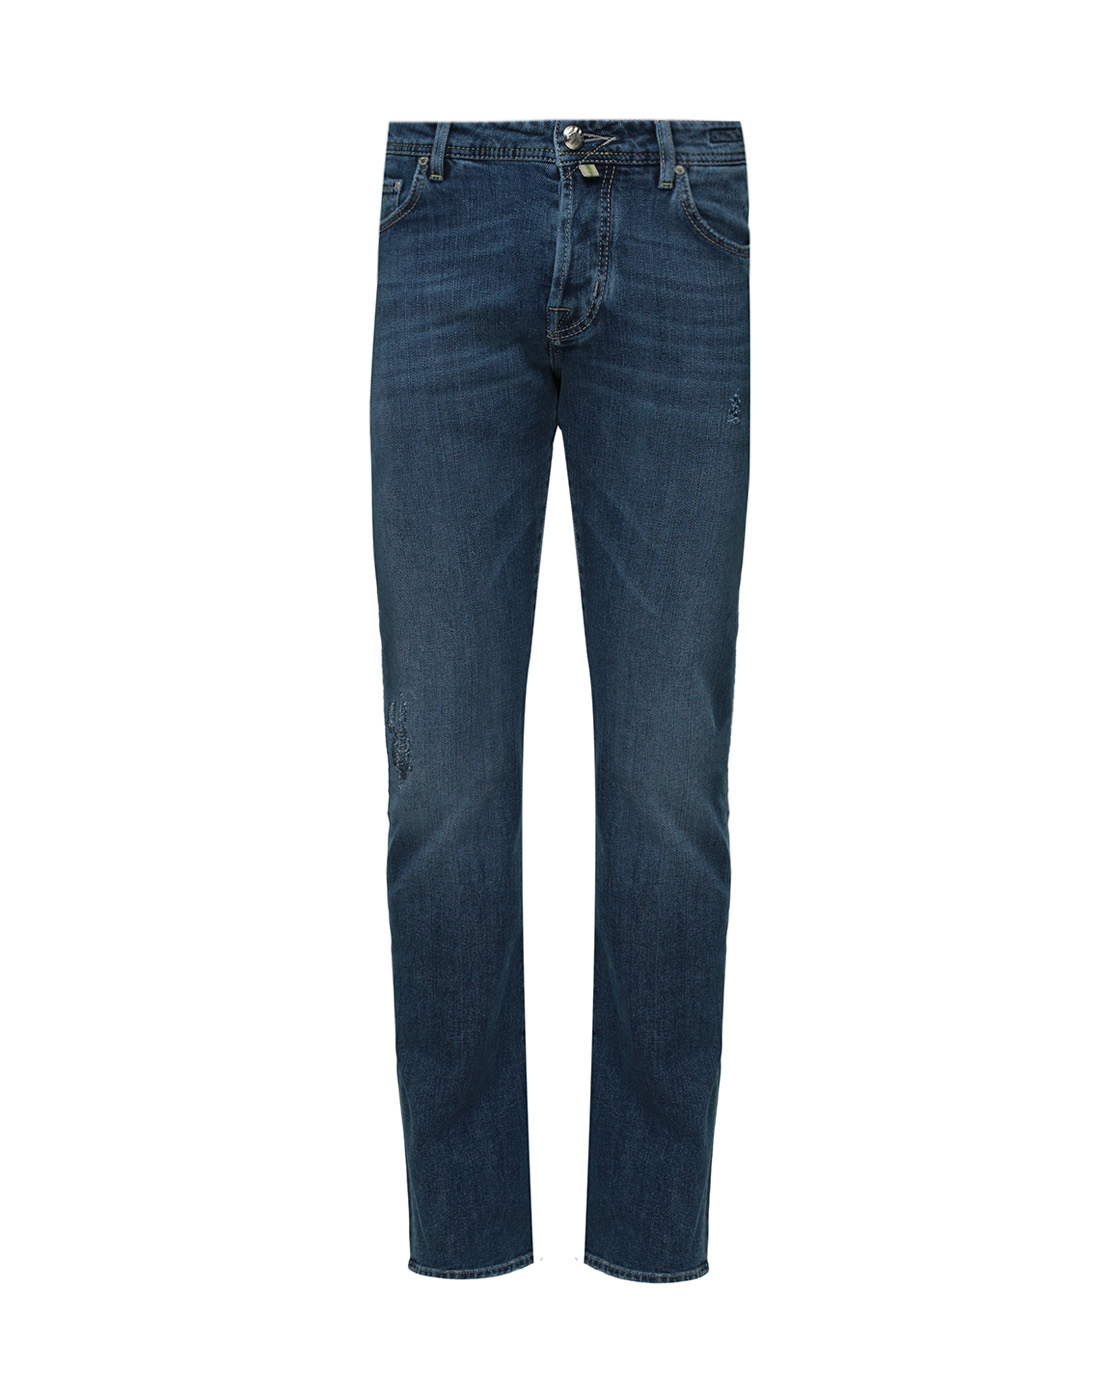 Мужские синие джинсы Jacob Cohen SS3612 066D-1